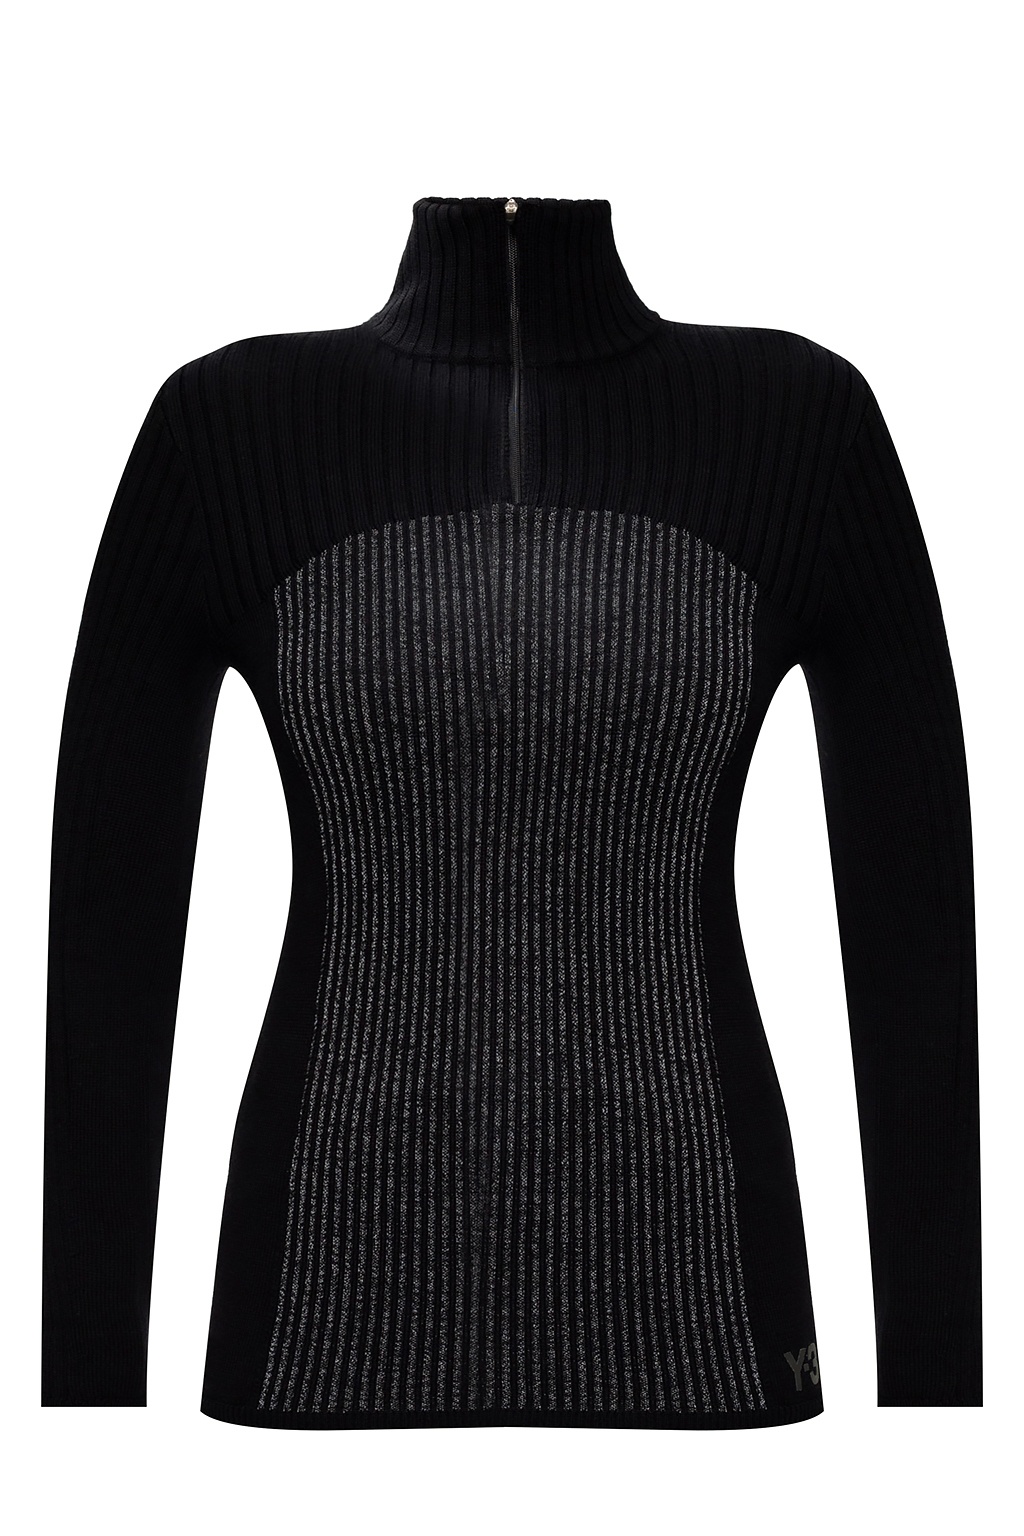 Y Yohji Yamamoto Turtleneck sweater Cotton jersey sweatshirt with  Gucci logo Women's Clothing IetpShops